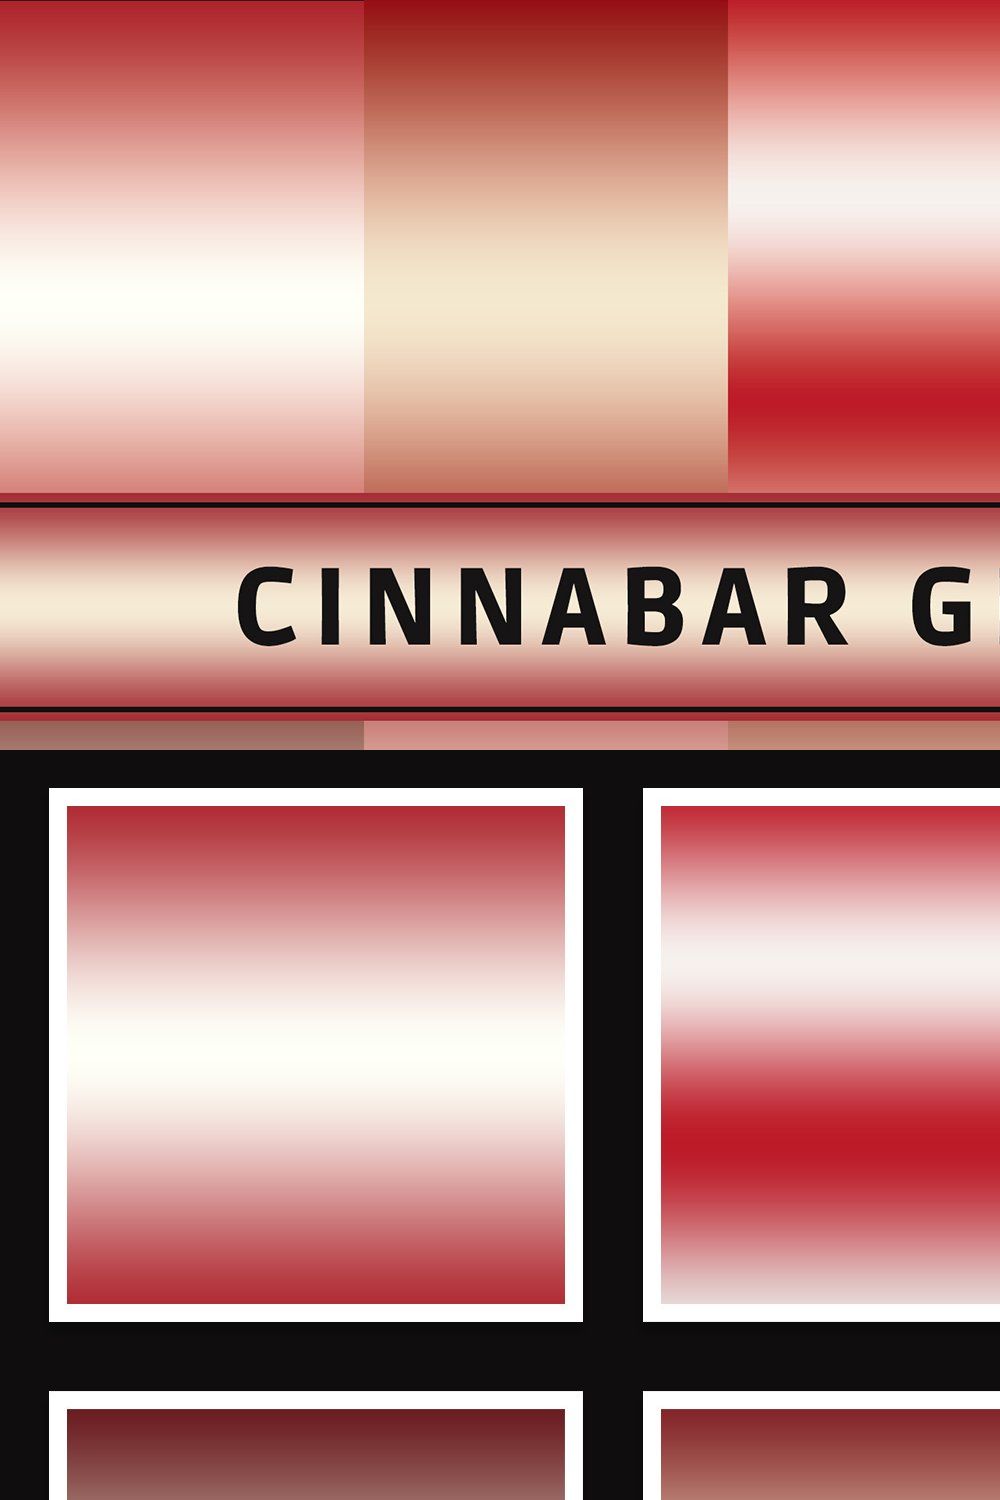 Cinnabar Gradients pinterest preview image.